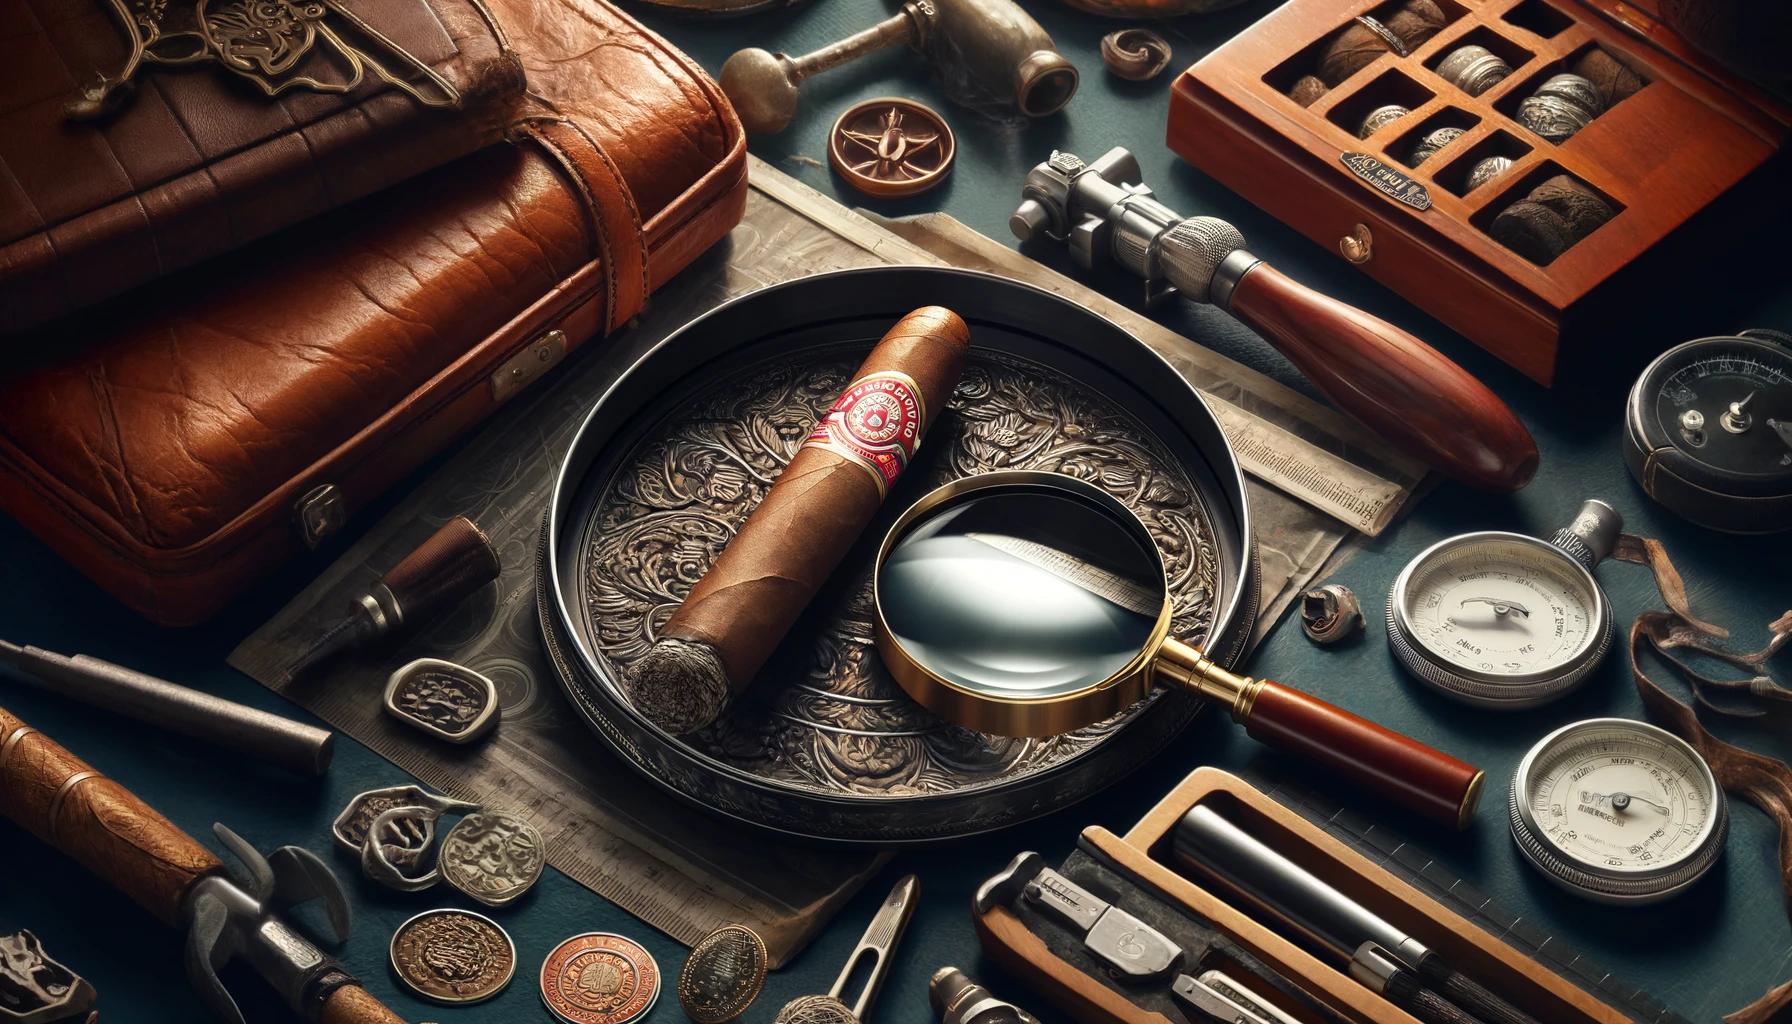 A box of Partagas Cigars